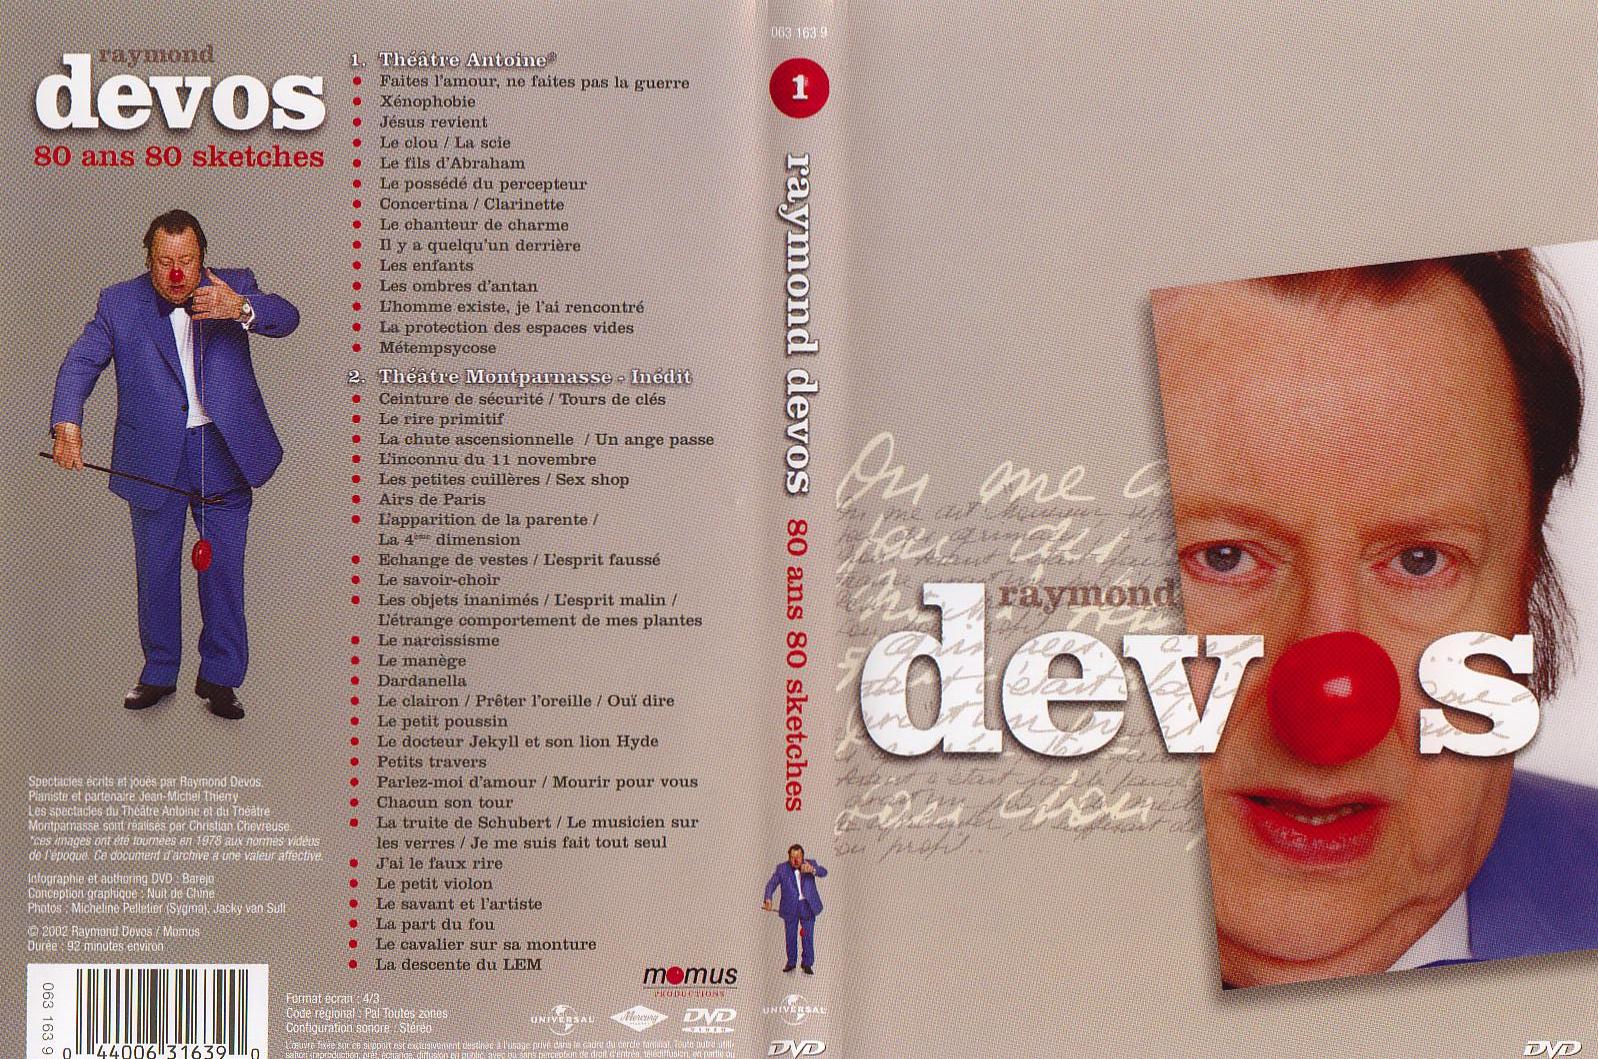 Jaquette DVD Raymond Devos vol 1